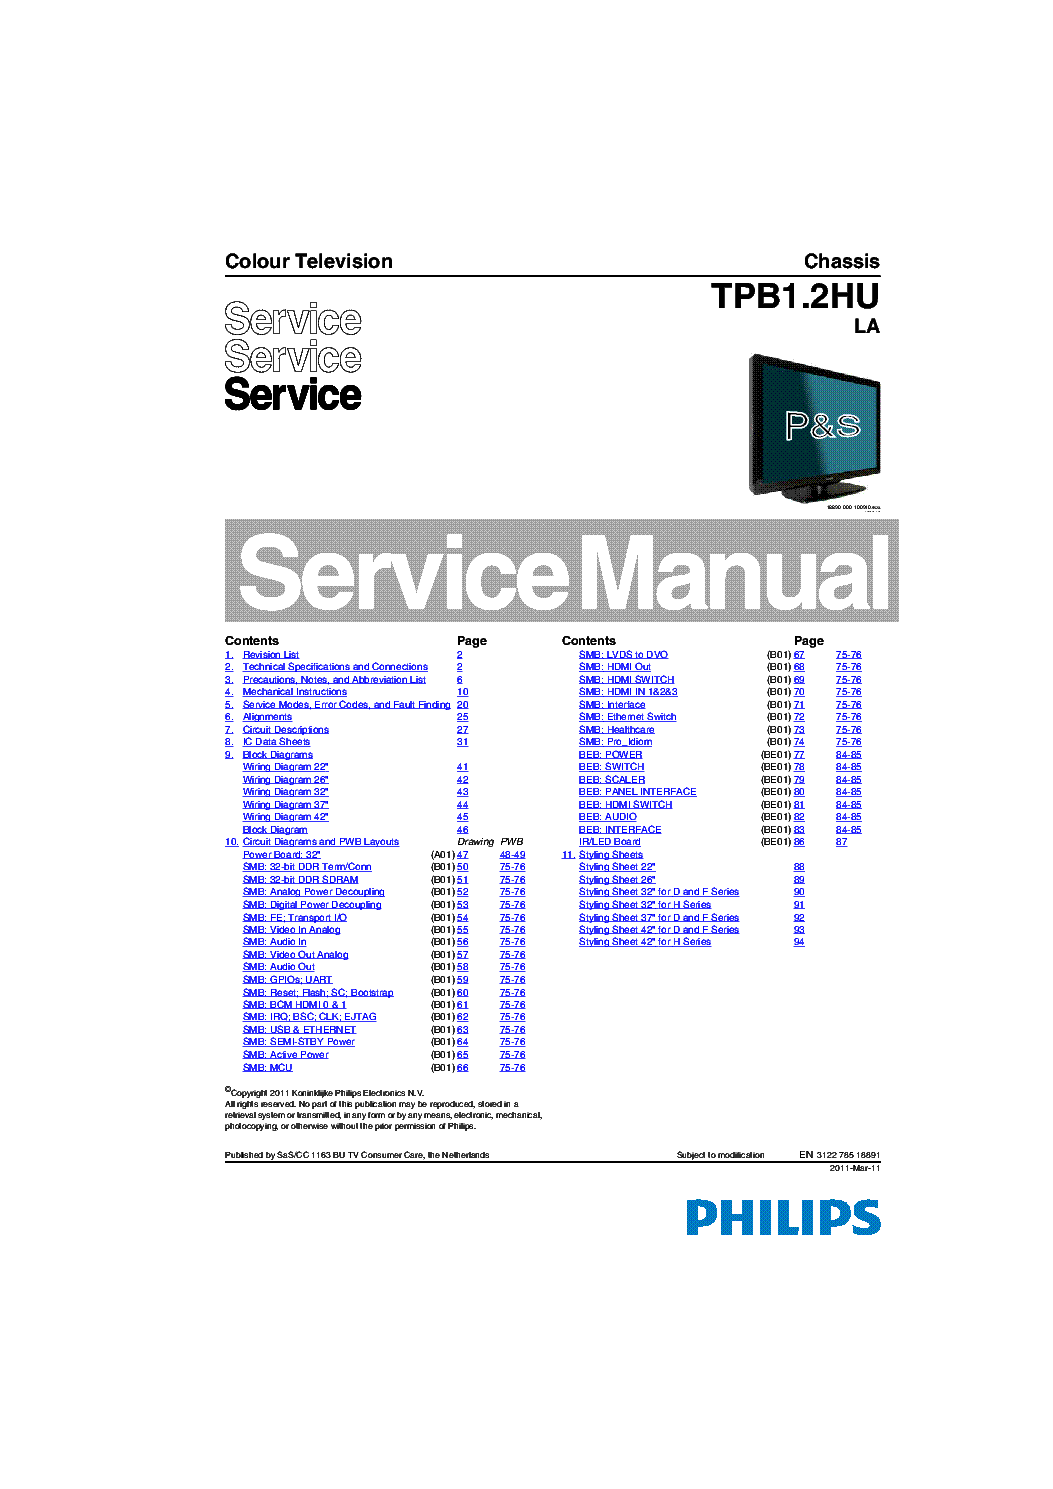 PHILIPS 22HFL5662H 32HFL4462F 37HFL4482F 37HFL5682D 42HFL5682D-F7 CHASSIS TPB1.2HULA service manual (1st page)